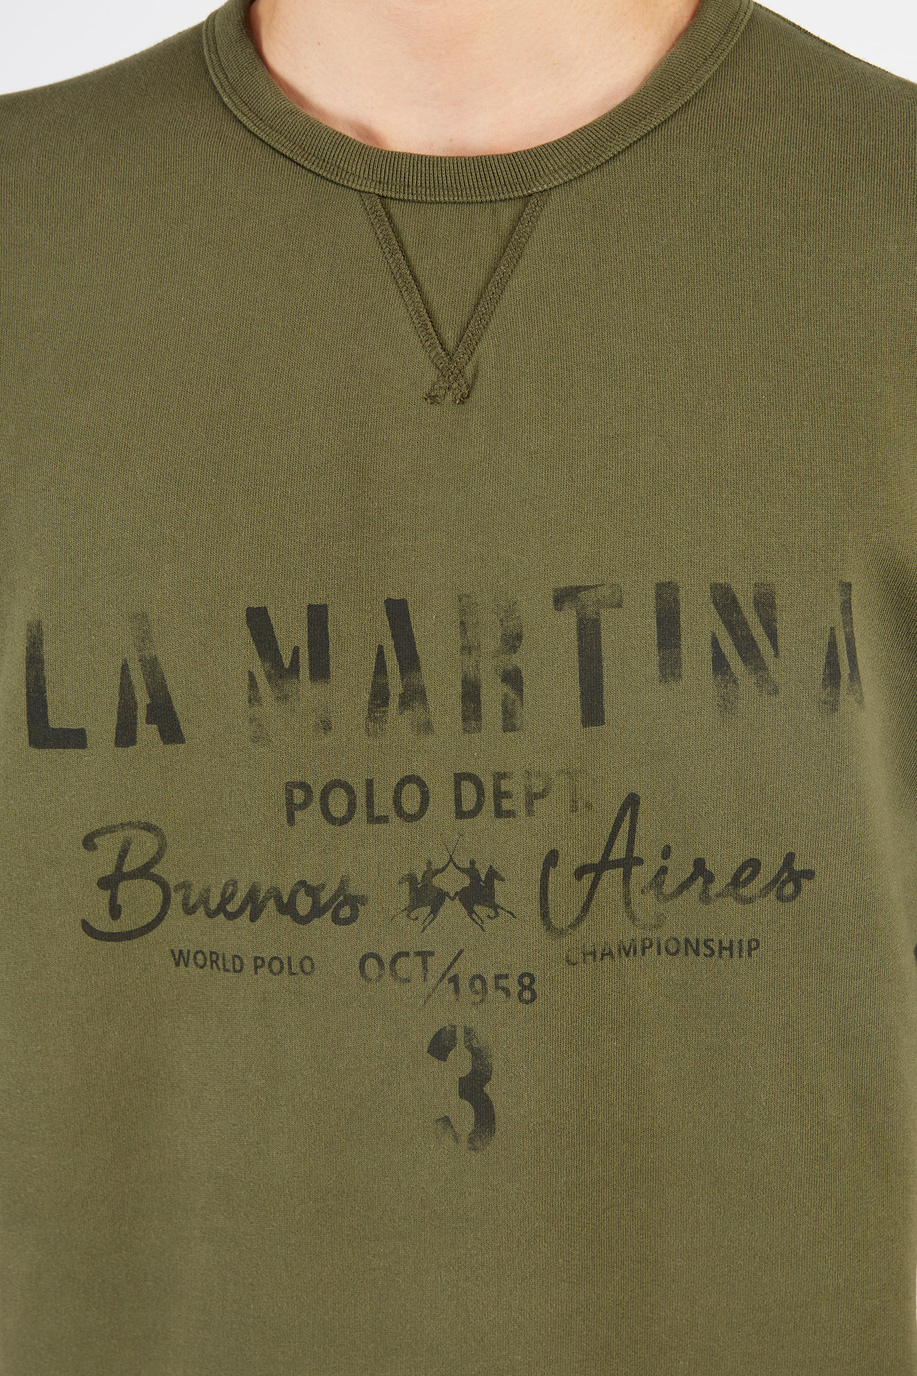 Men’s sweatshirt in 100% cotton regular fit - Knitwear & Sweatshirts | La Martina - Official Online Shop